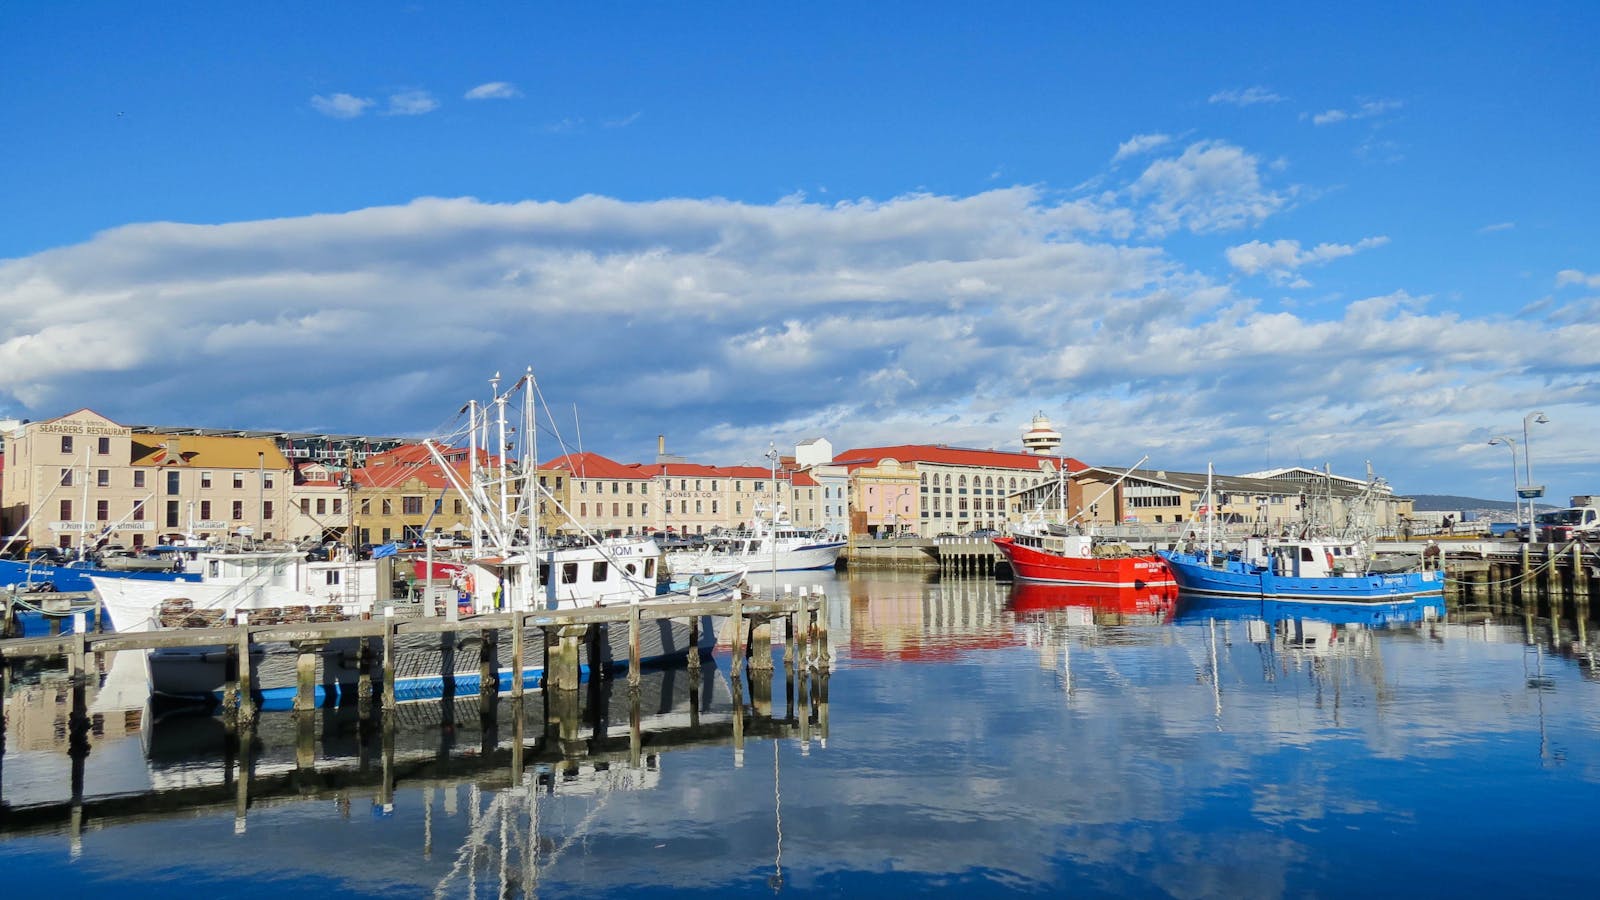 Hobart Waterfront